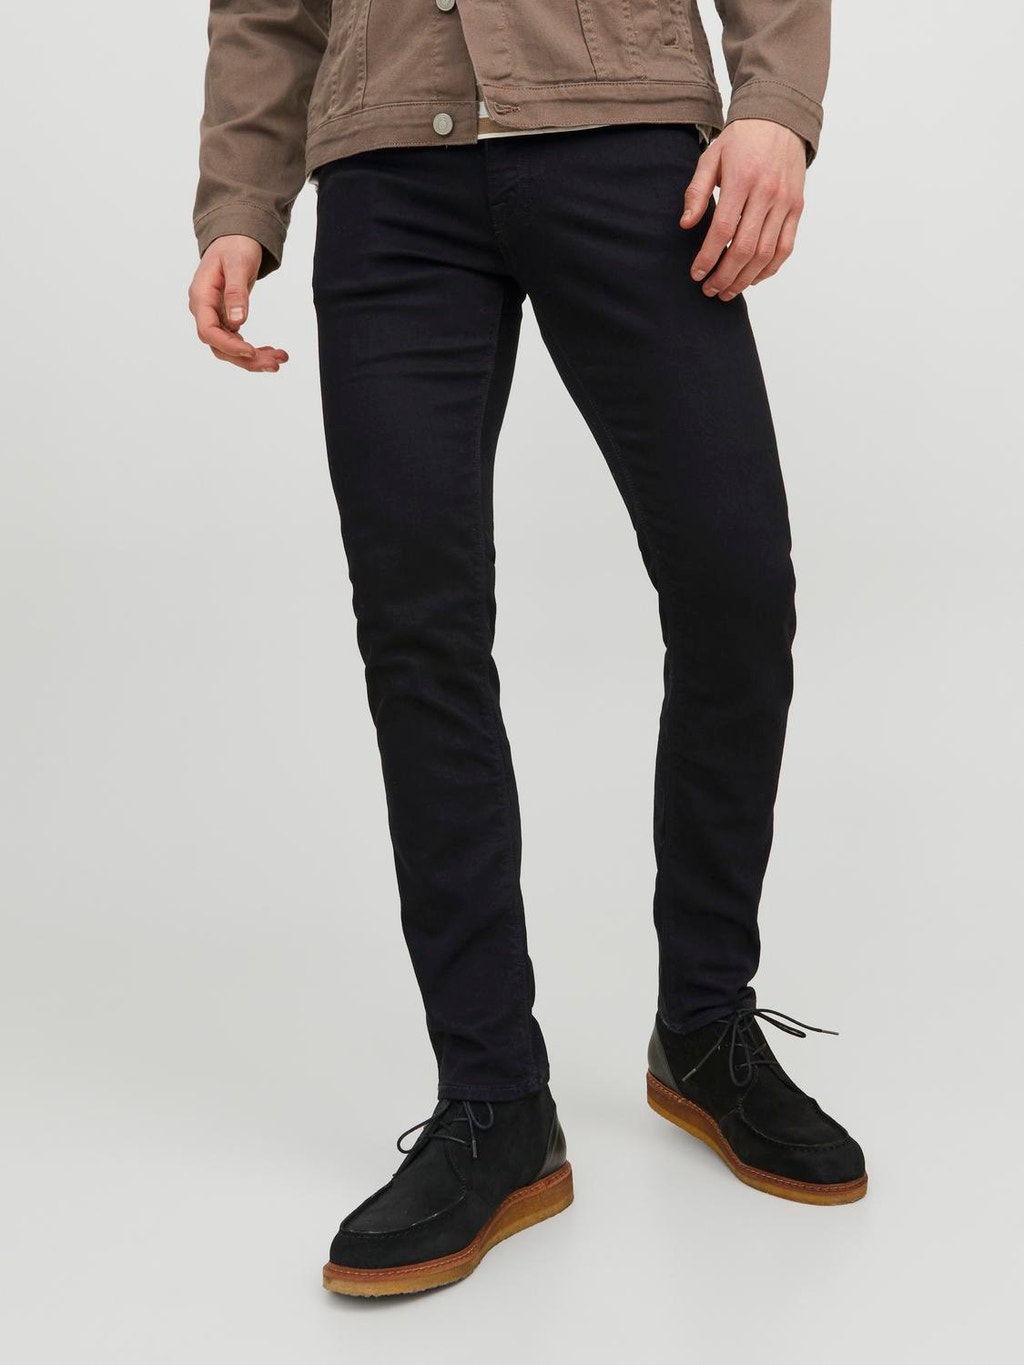 GLENN FELIX AM 046 Slim fit jeans | Black | Jack & Jones®